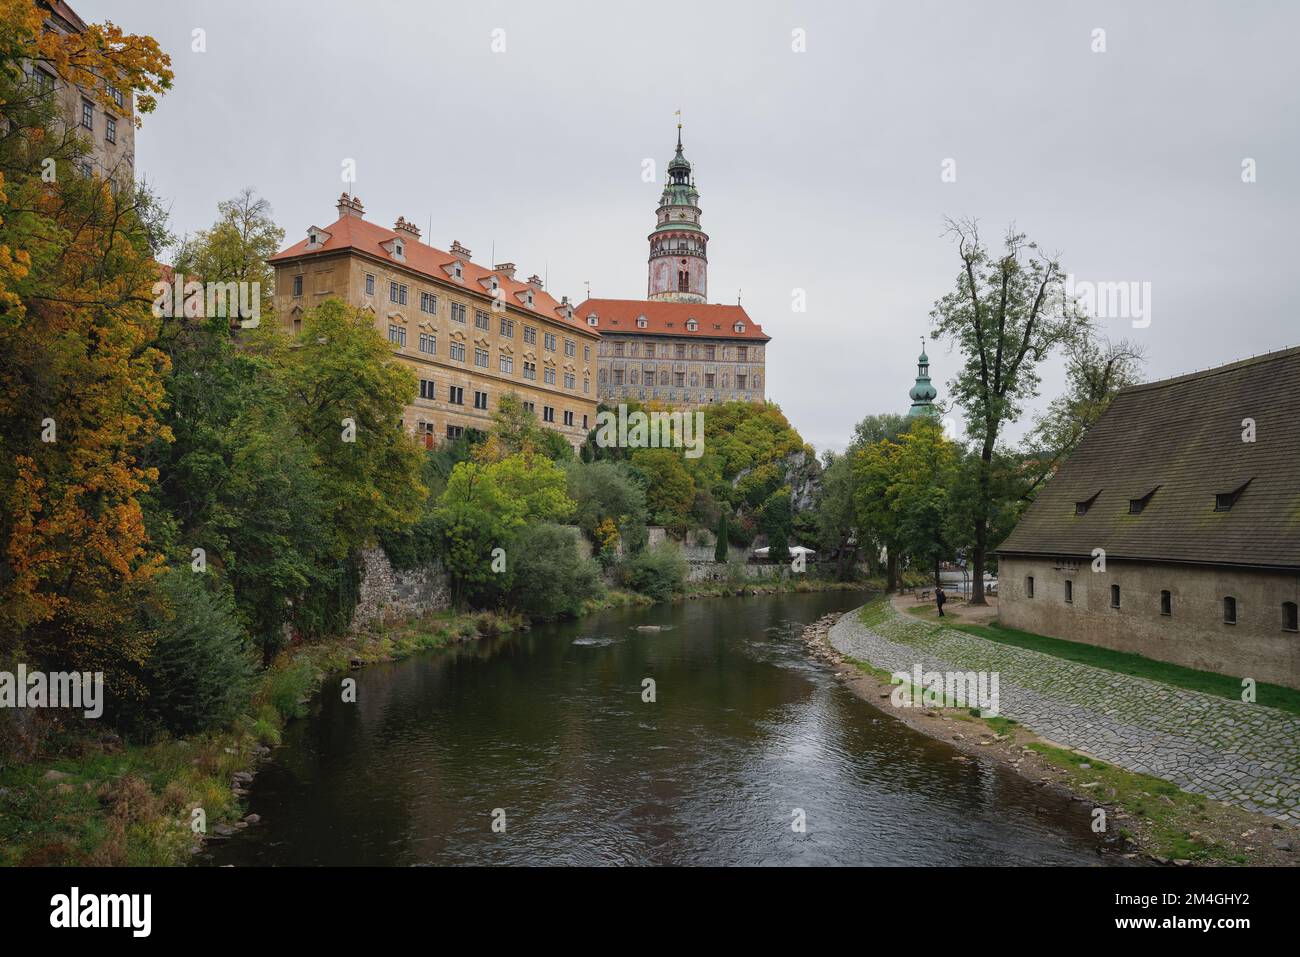 Vltava River and Cesky Krumlov Castle with Mint Building, Tower and Little Castle - Cesky Krumlov, Czech Republic Stock Photo